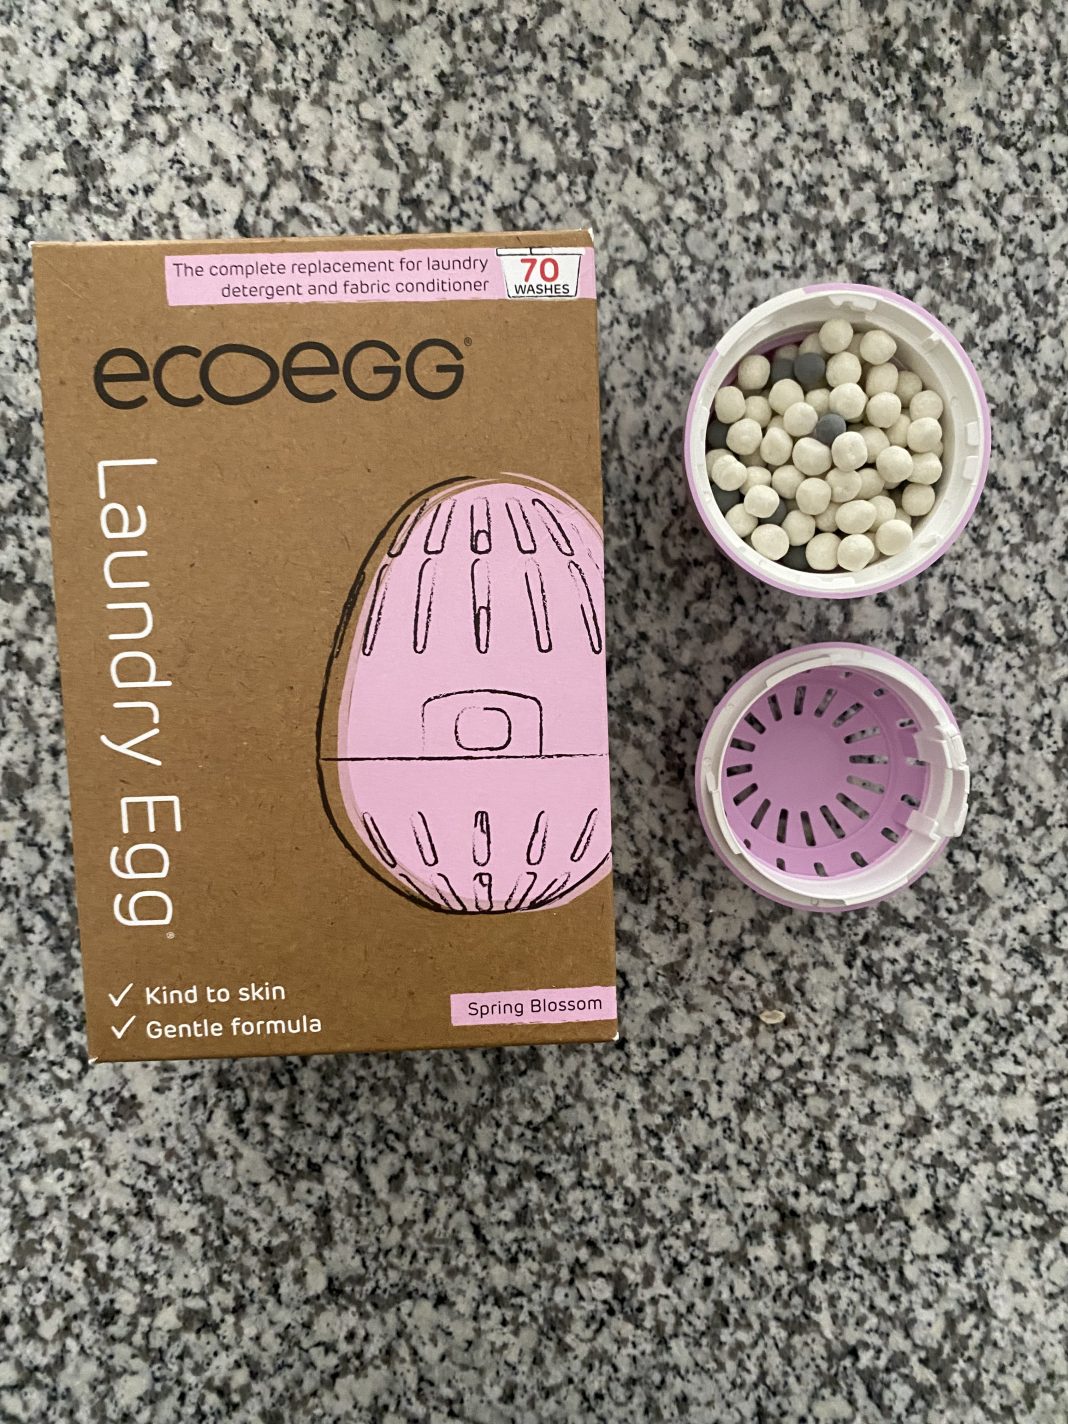 ecoegg laundry egg with pellets